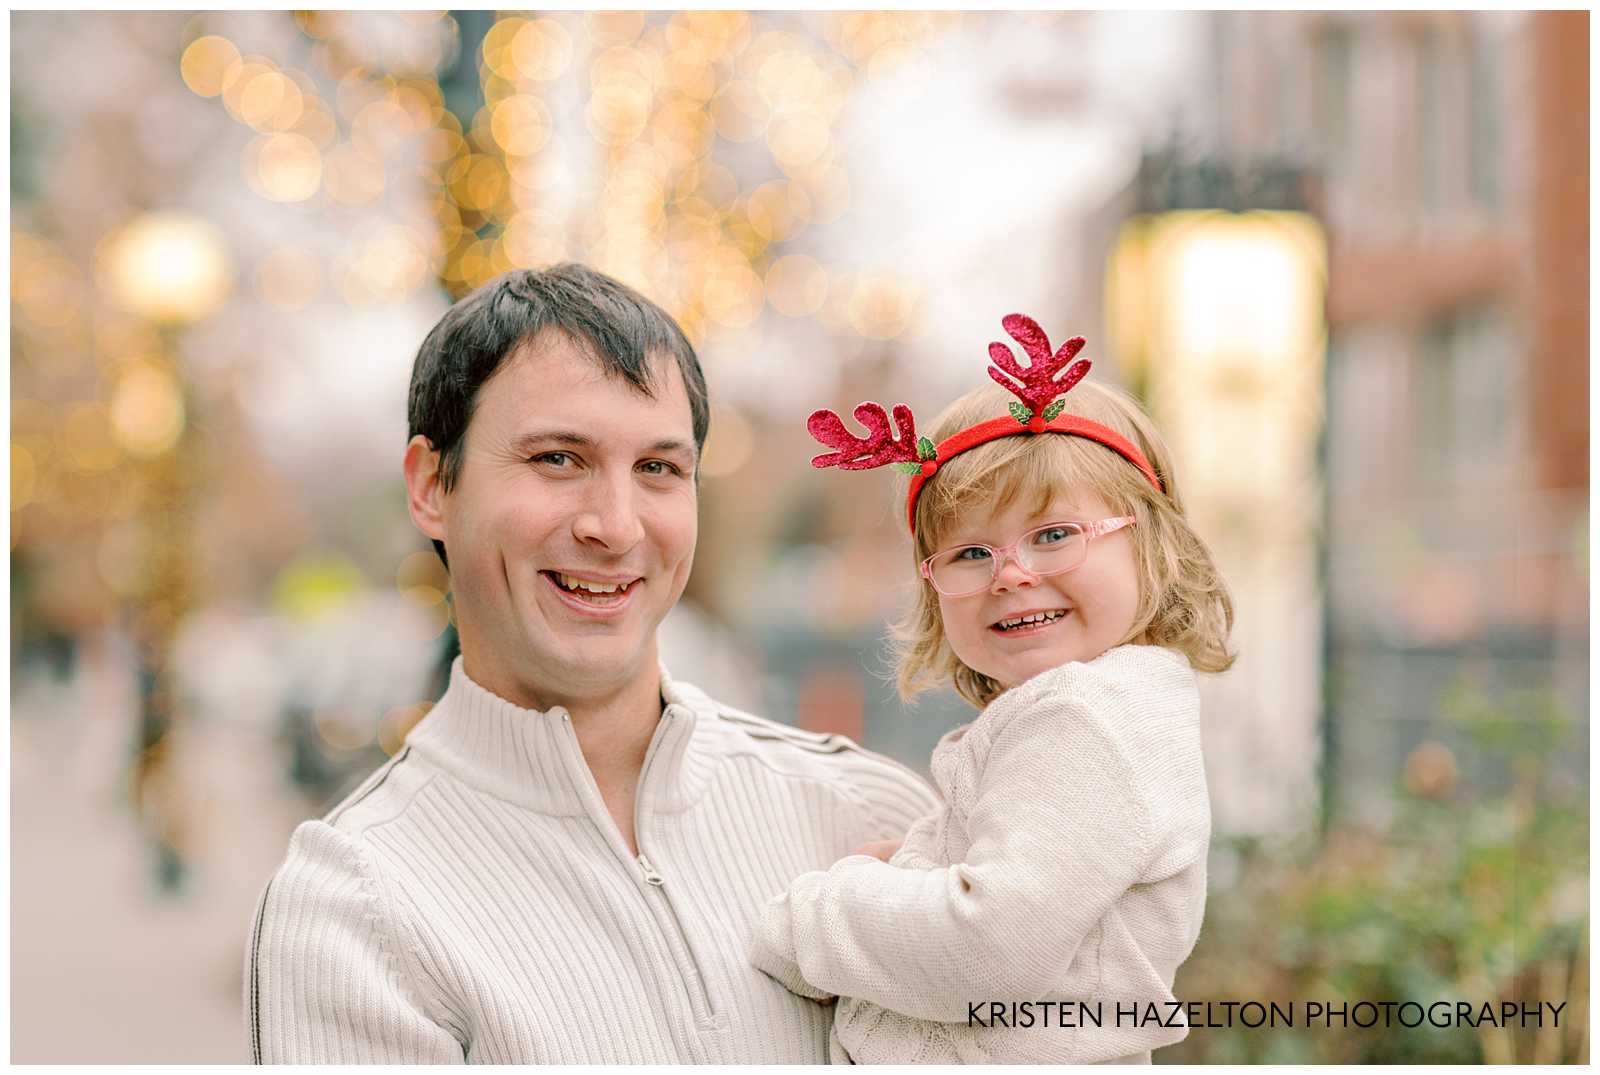 Dad in white sweater hugging his young daughter wearing red reindeer antler headband.